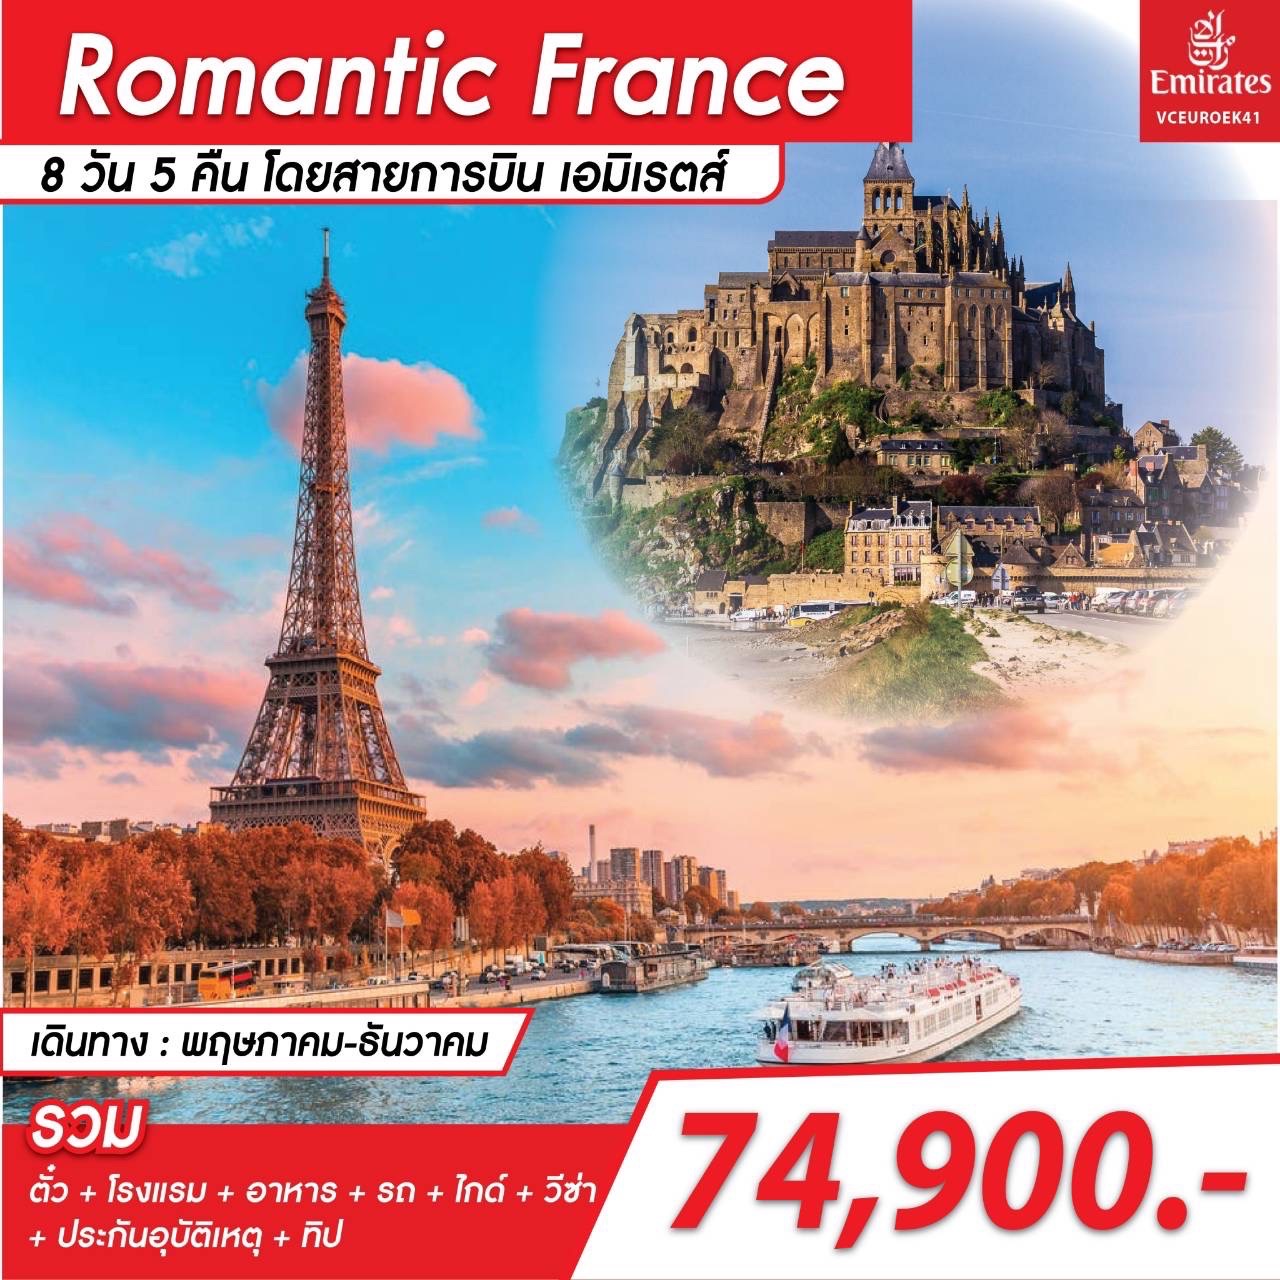 VCEURO 41 Romantic France 8 Days 5 Nights_2022